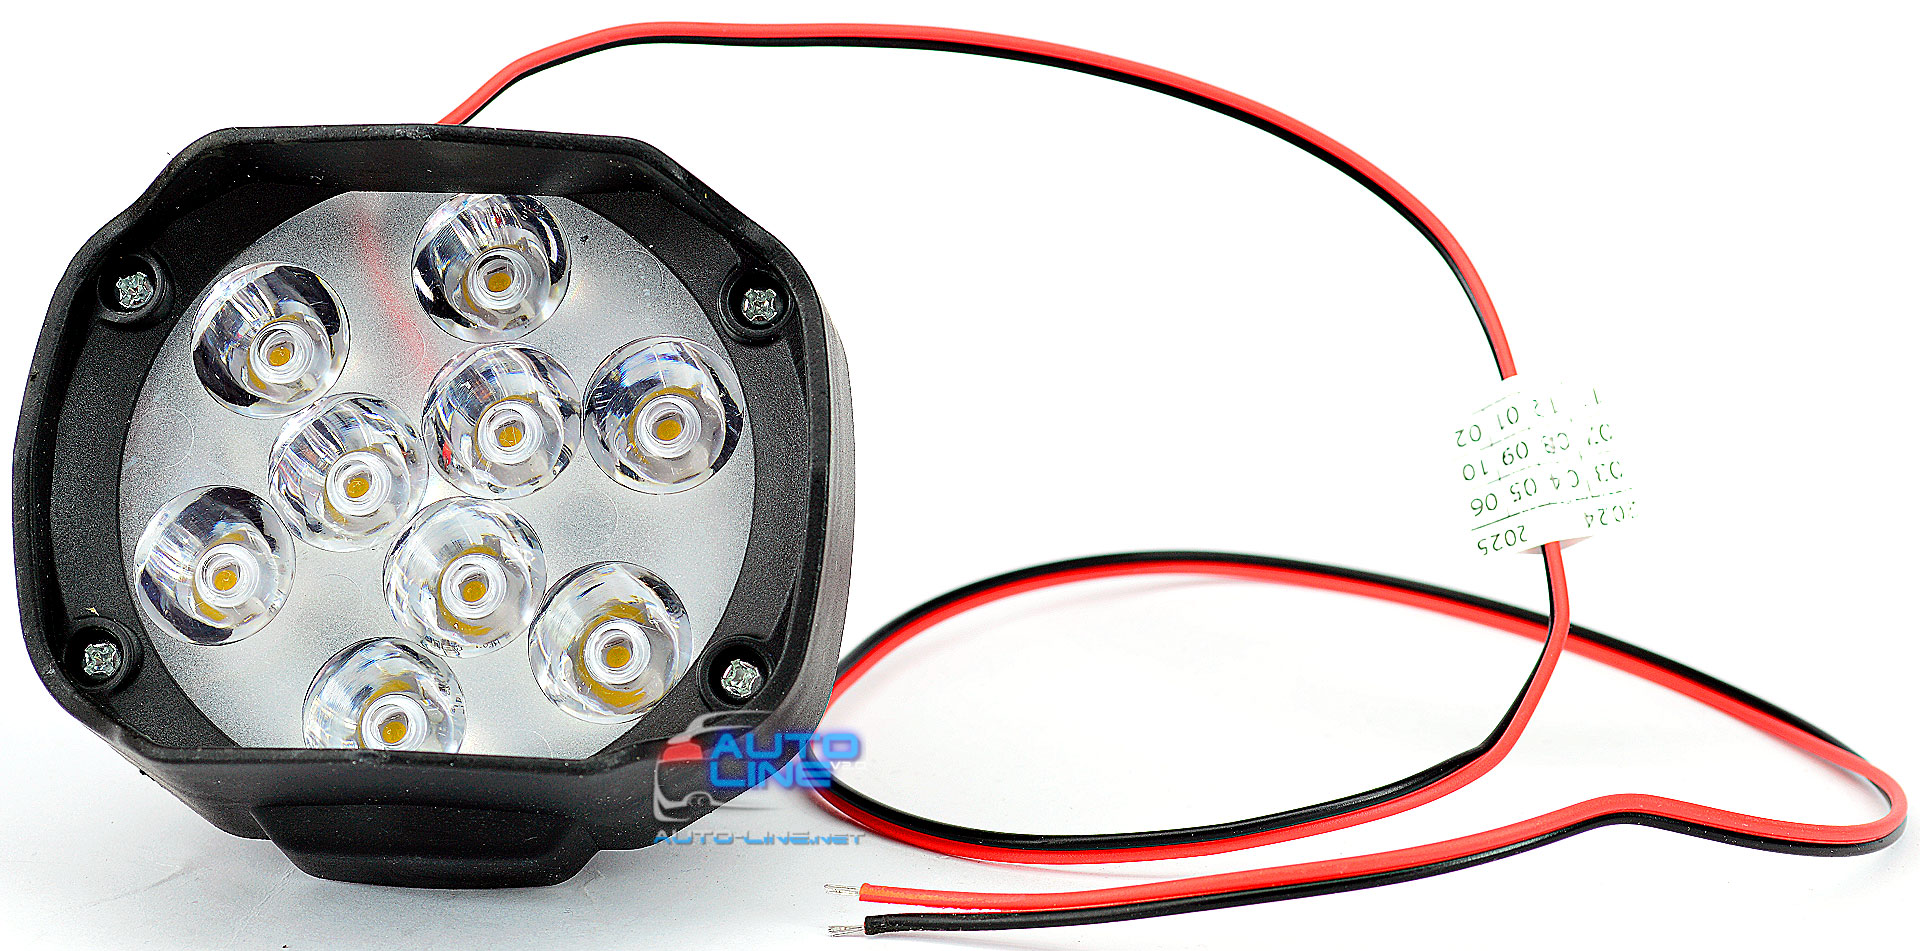 Nextone NWL-A02 9W SP — дешевая пластиковая дополнительная LED-фара дальнего света